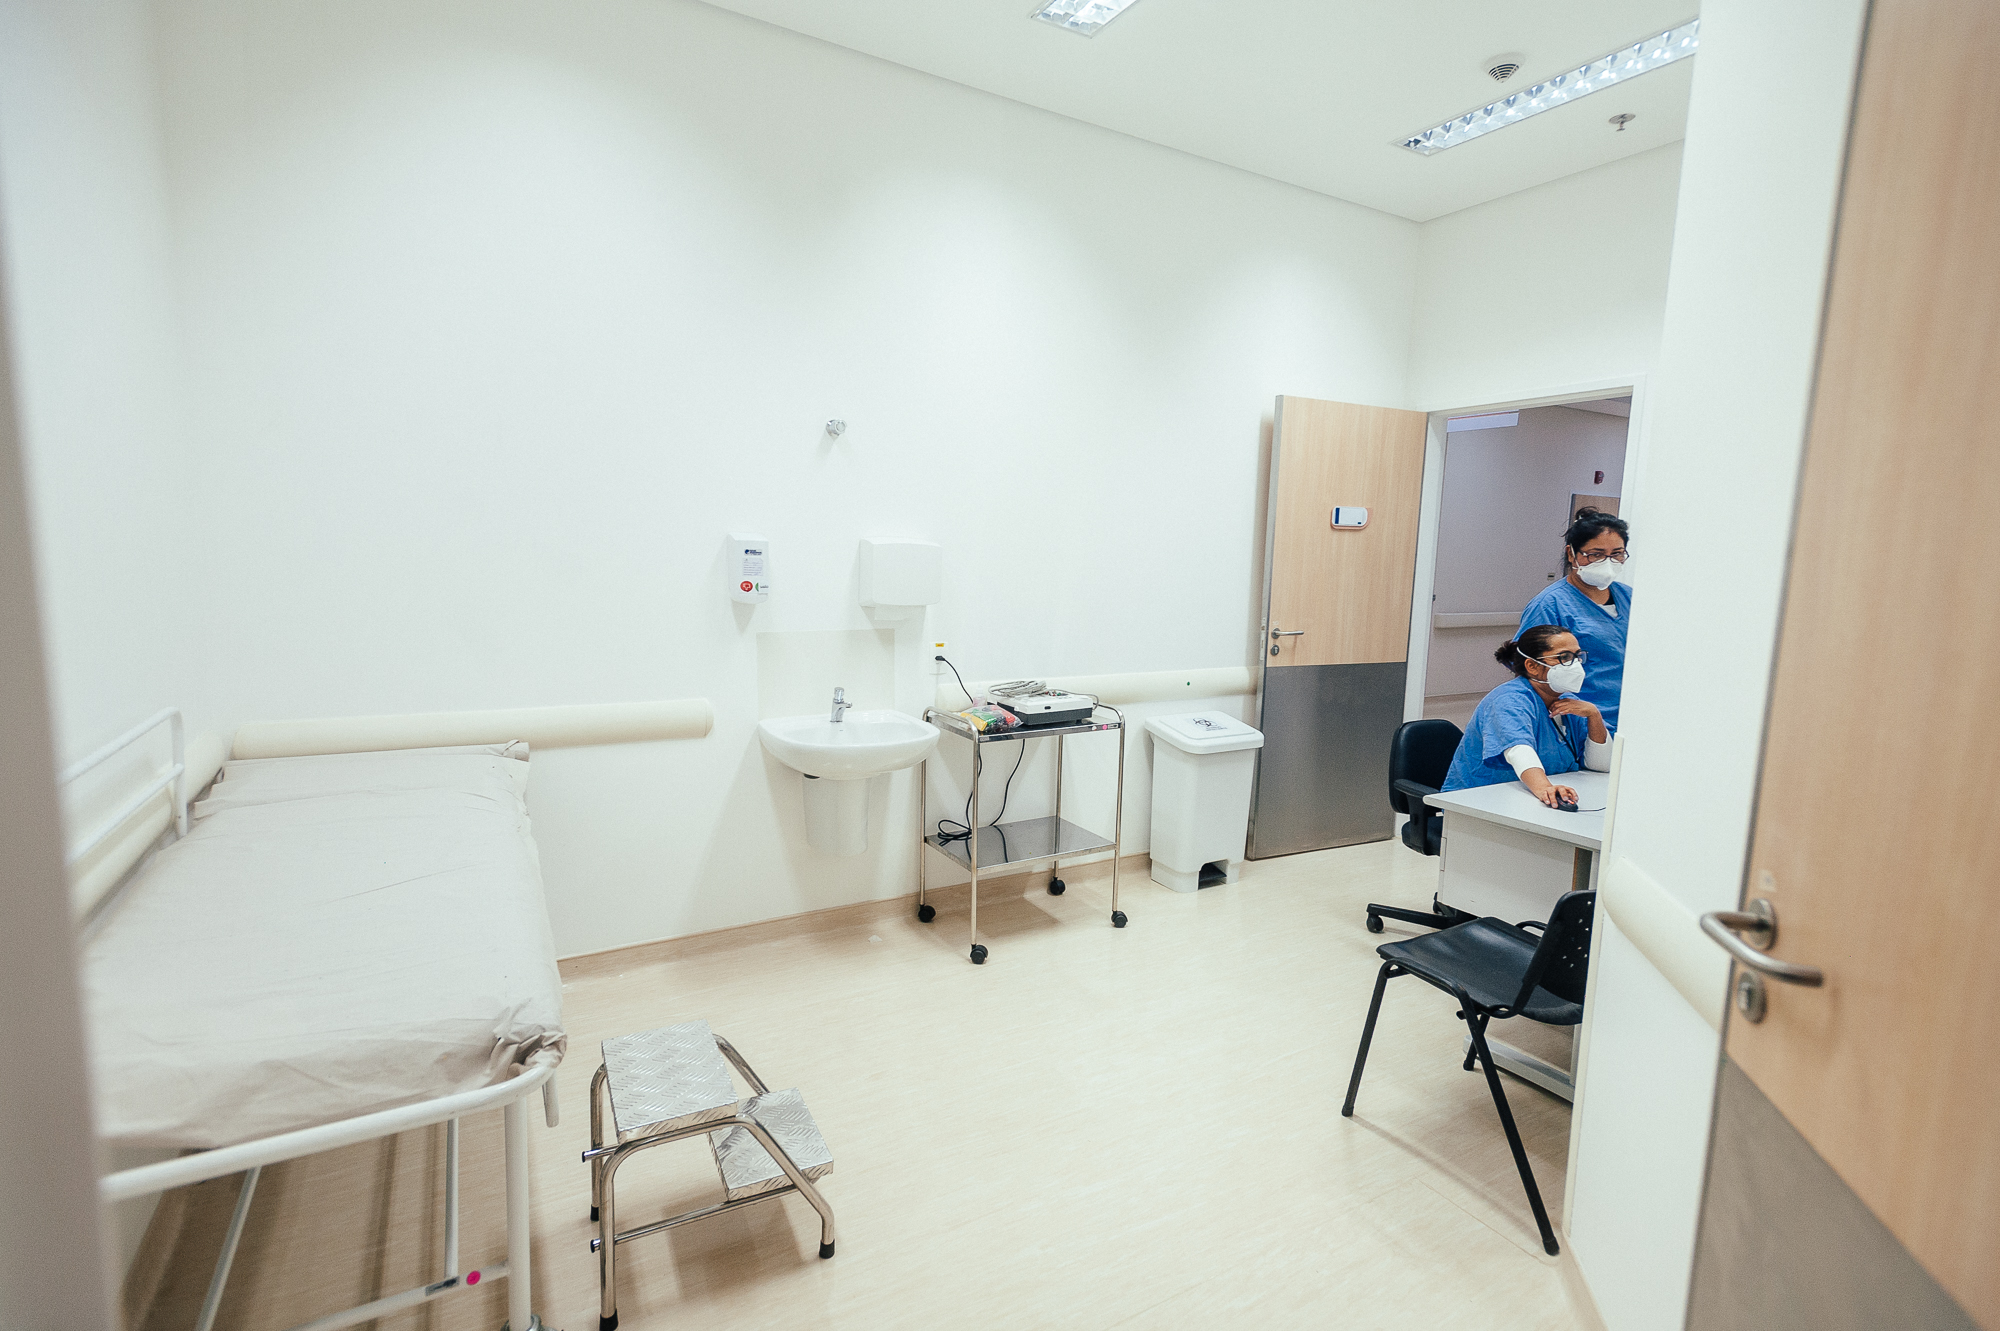 1066650-Inauguração do Pronto Socorro do Hospital Municipal da Brasilândia – Adib Jatene